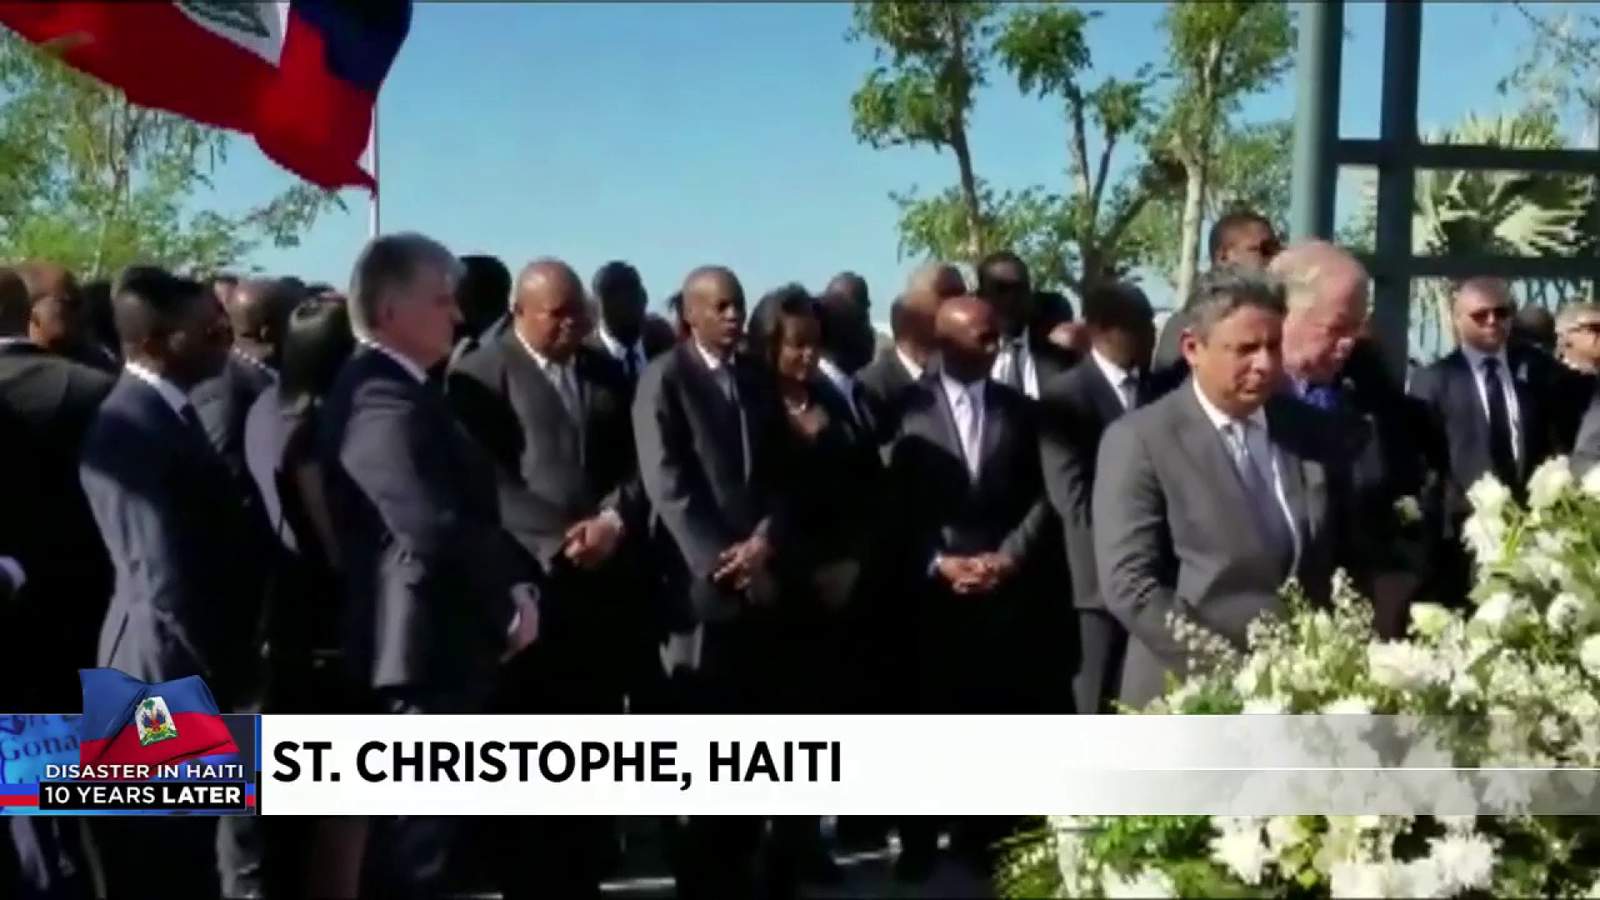 A decade after earthquake that devastated Haiti